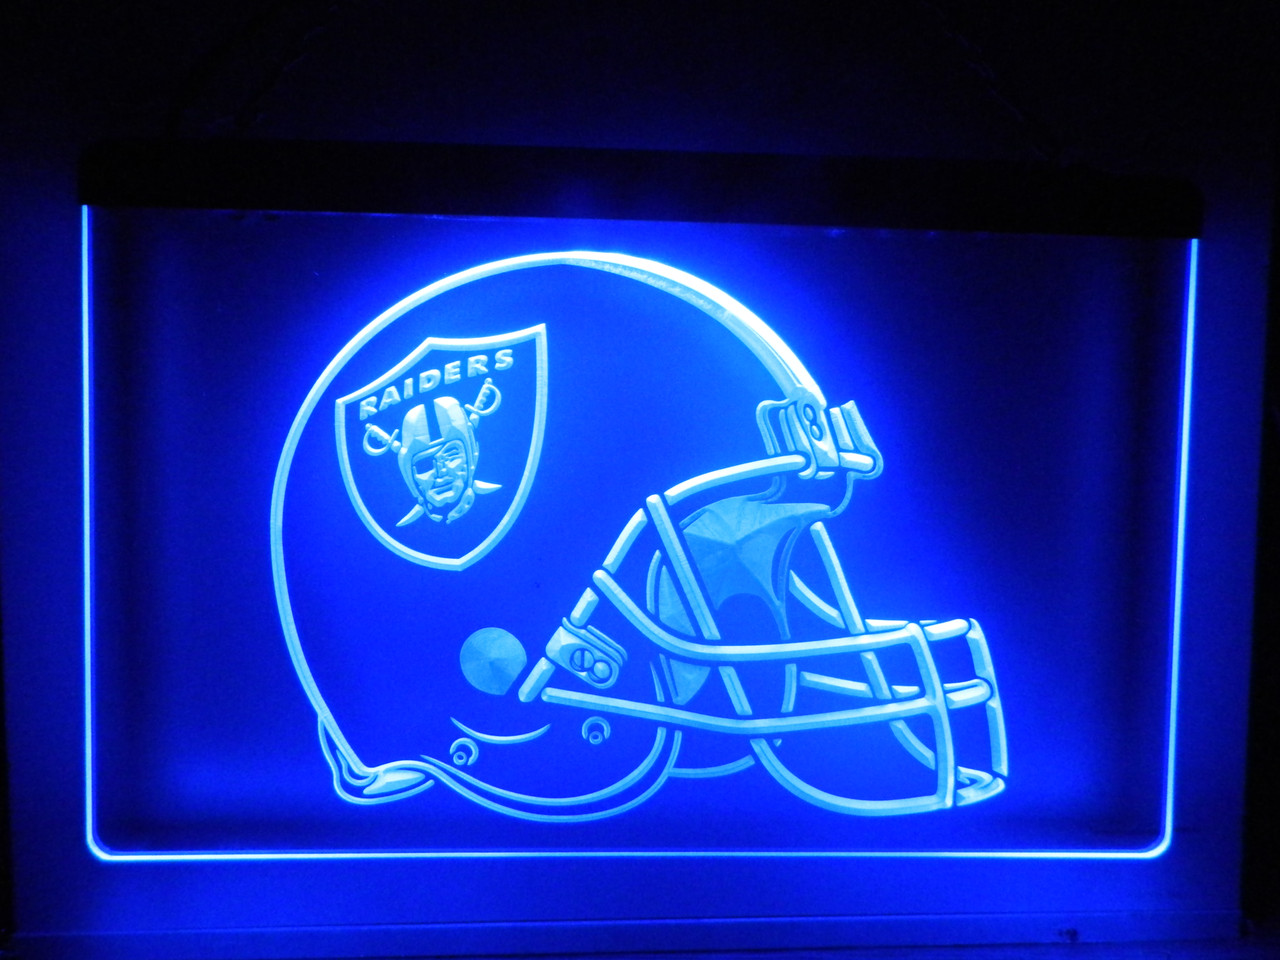 Las Vegas Raiders Acrylic LED Sign (C)